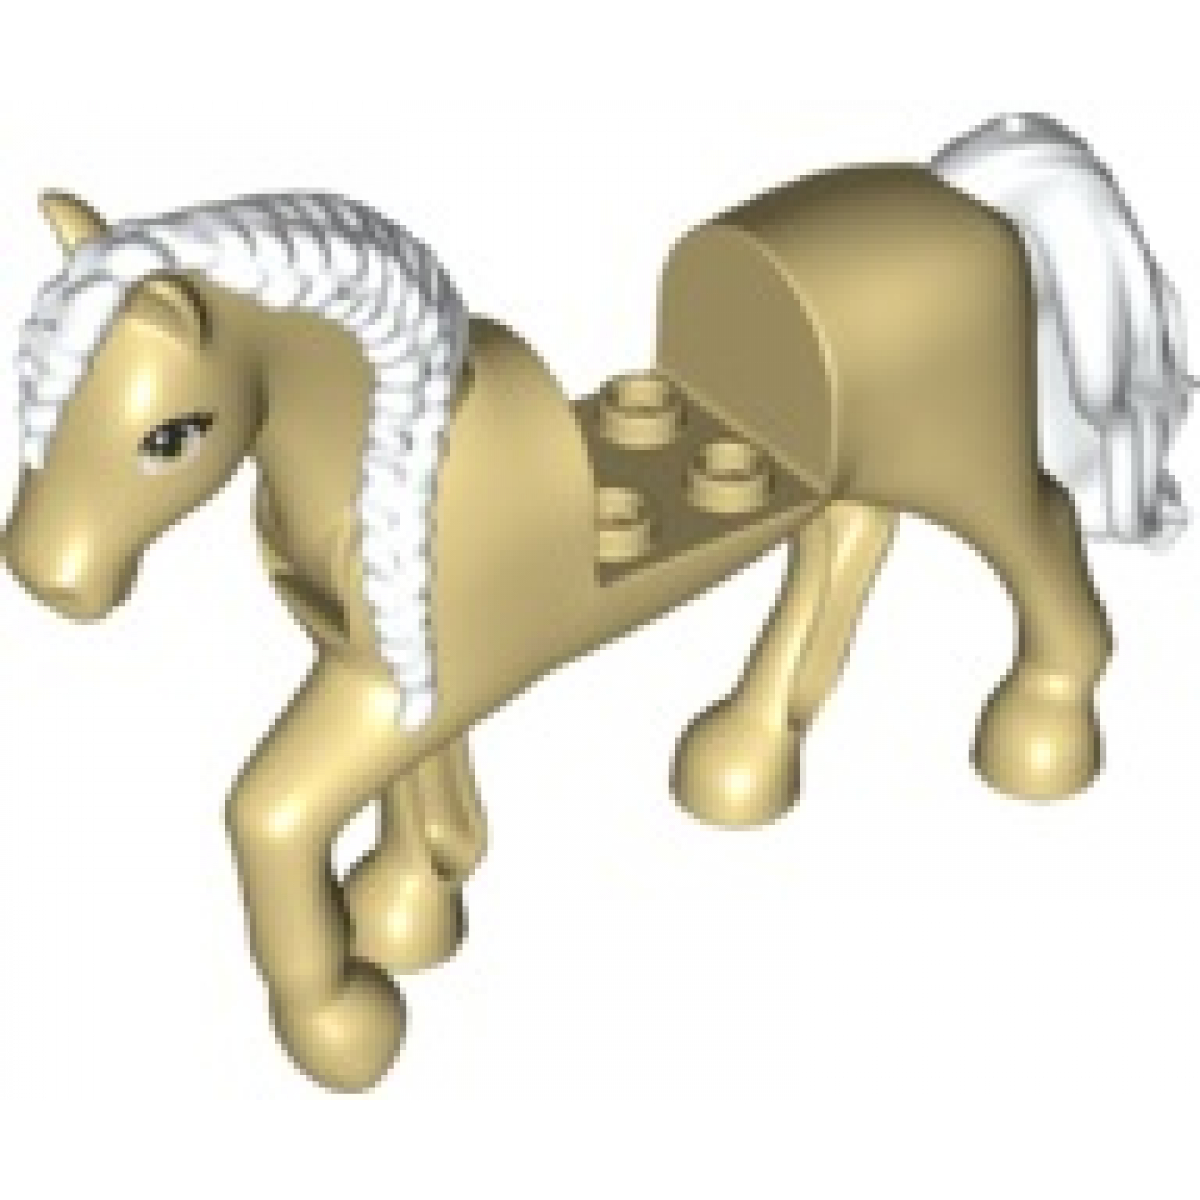 Lego® 67560, 82445pb02, 6402706 animal, petit cheval, poulain, poney, blanc